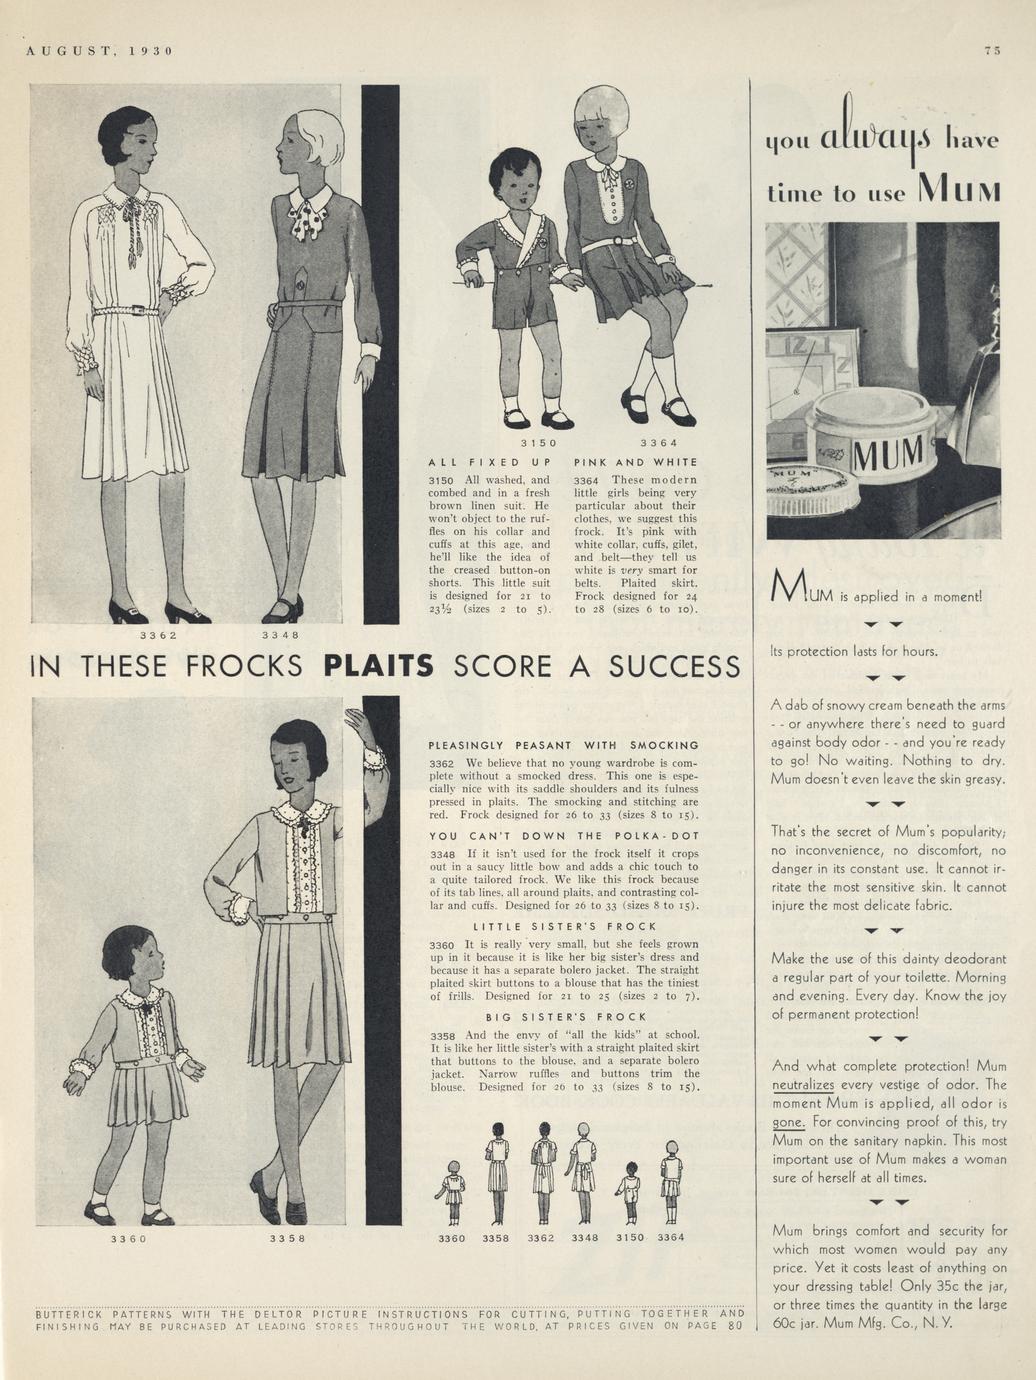 Sears short pants trousers suits 1930